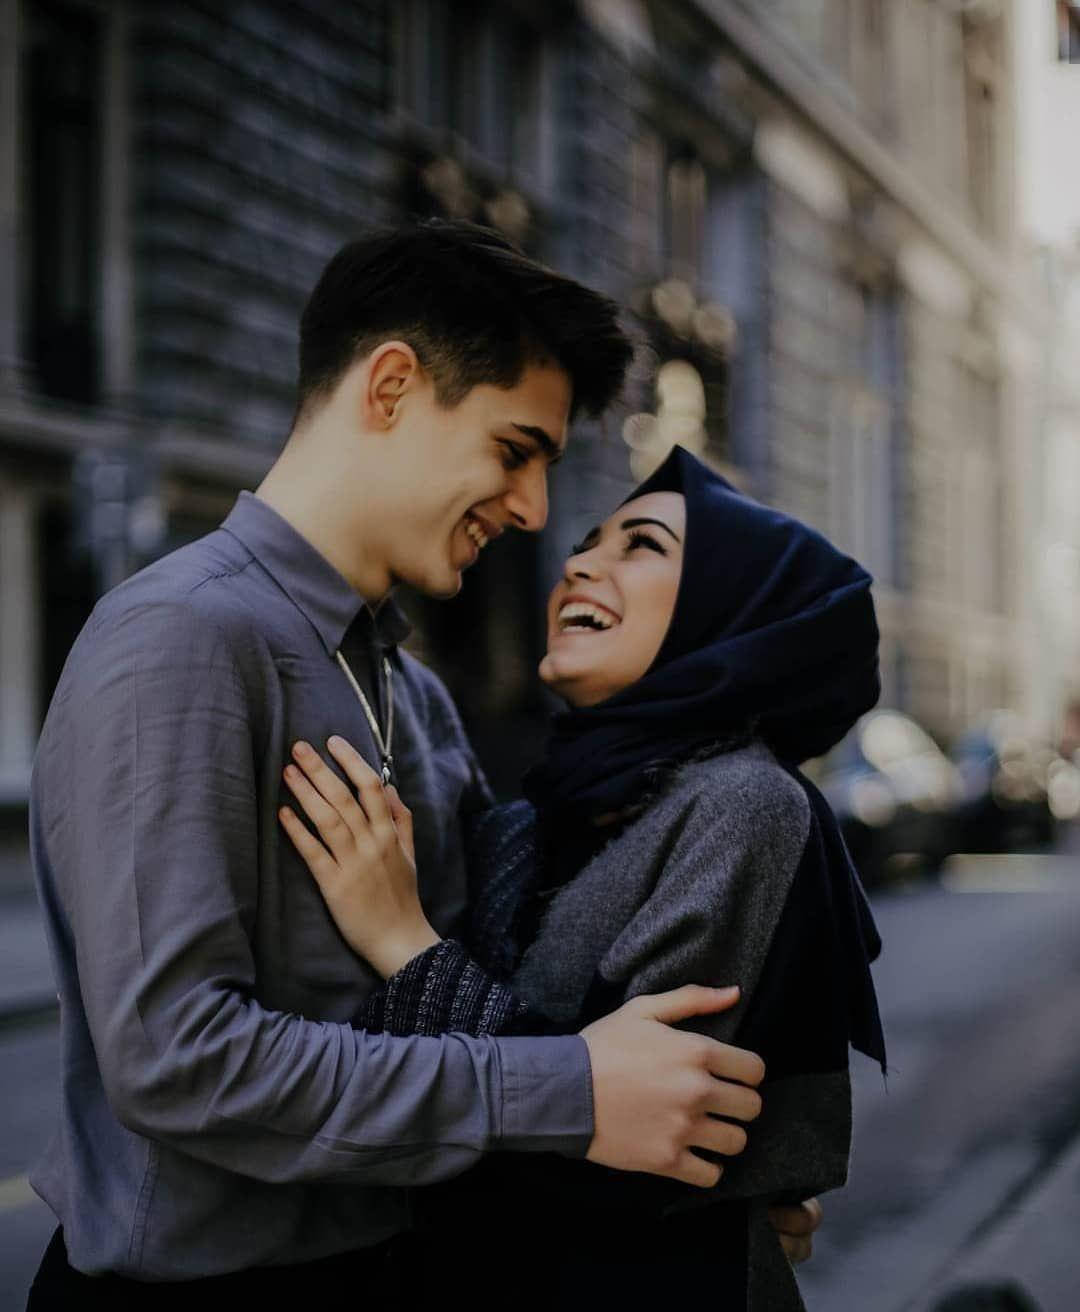 Muslim Matching Couples iPhone Wallpaper Lock Screen (Download Now) 